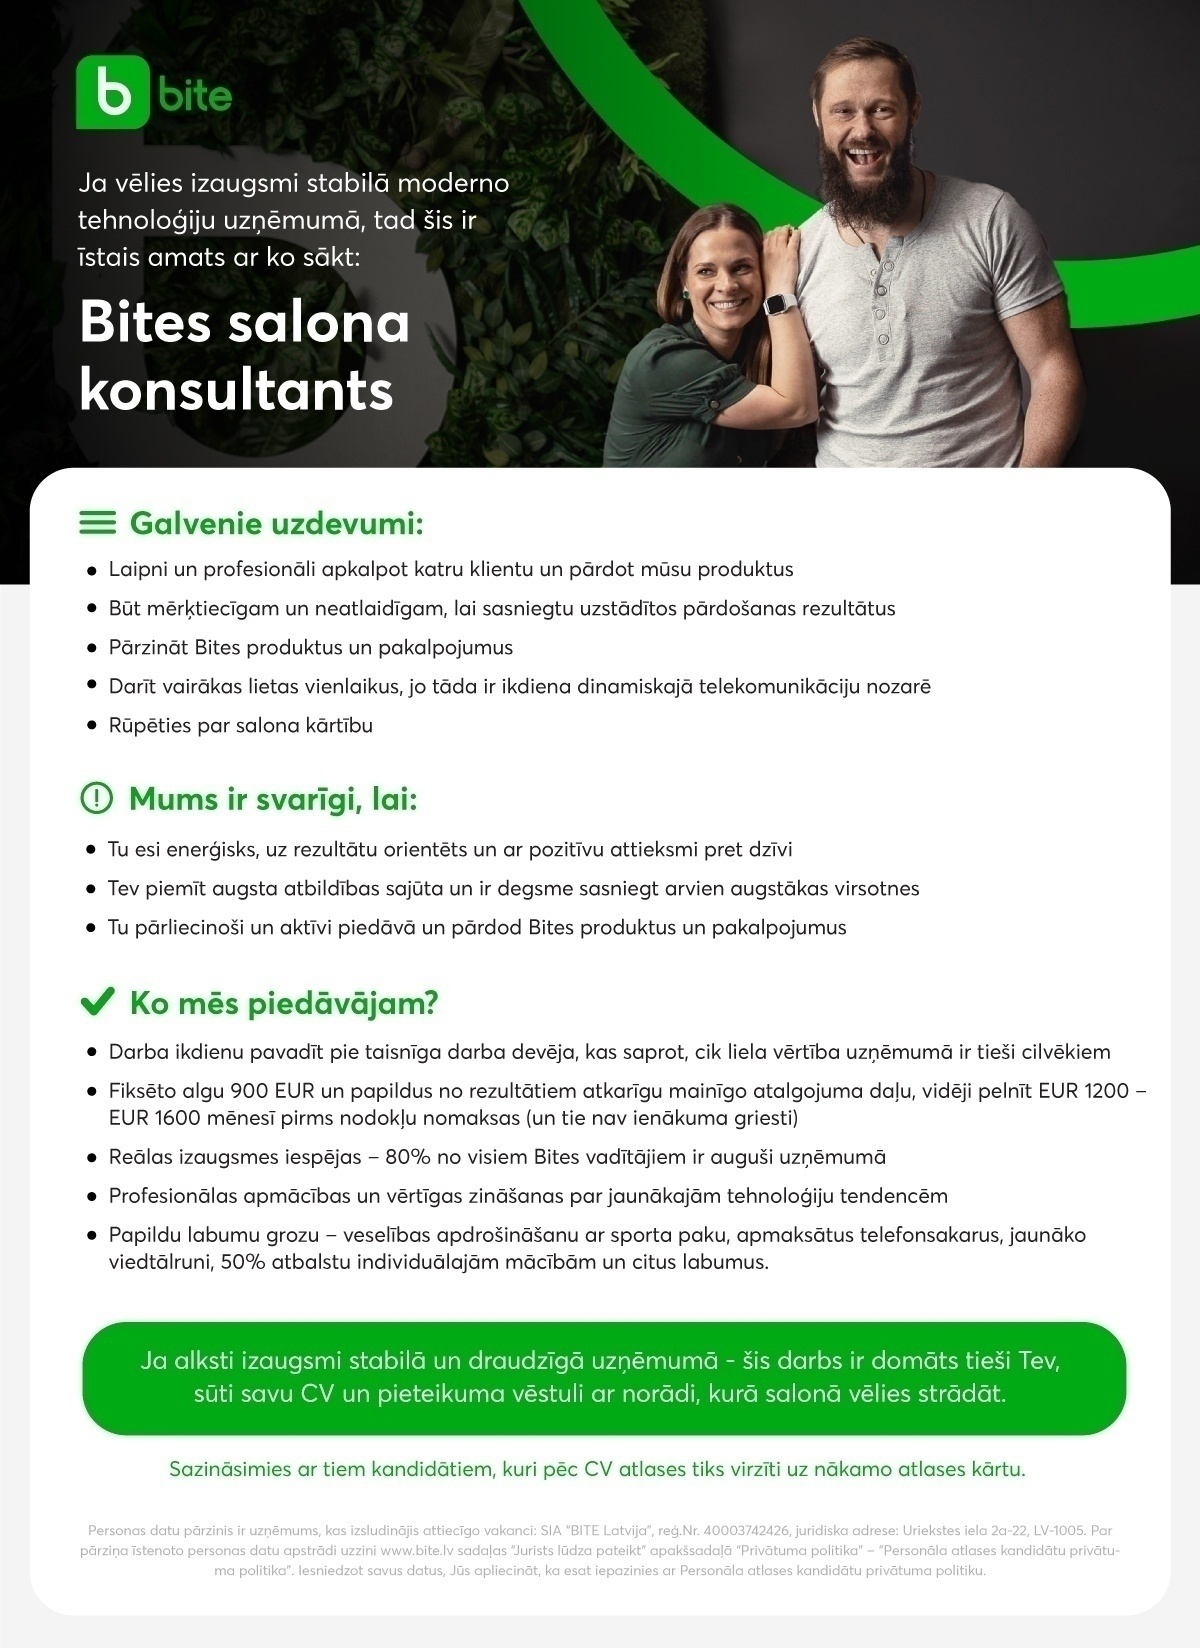 Bite Latvija, SIA "Bite" salona konsultants/-e Valmierā